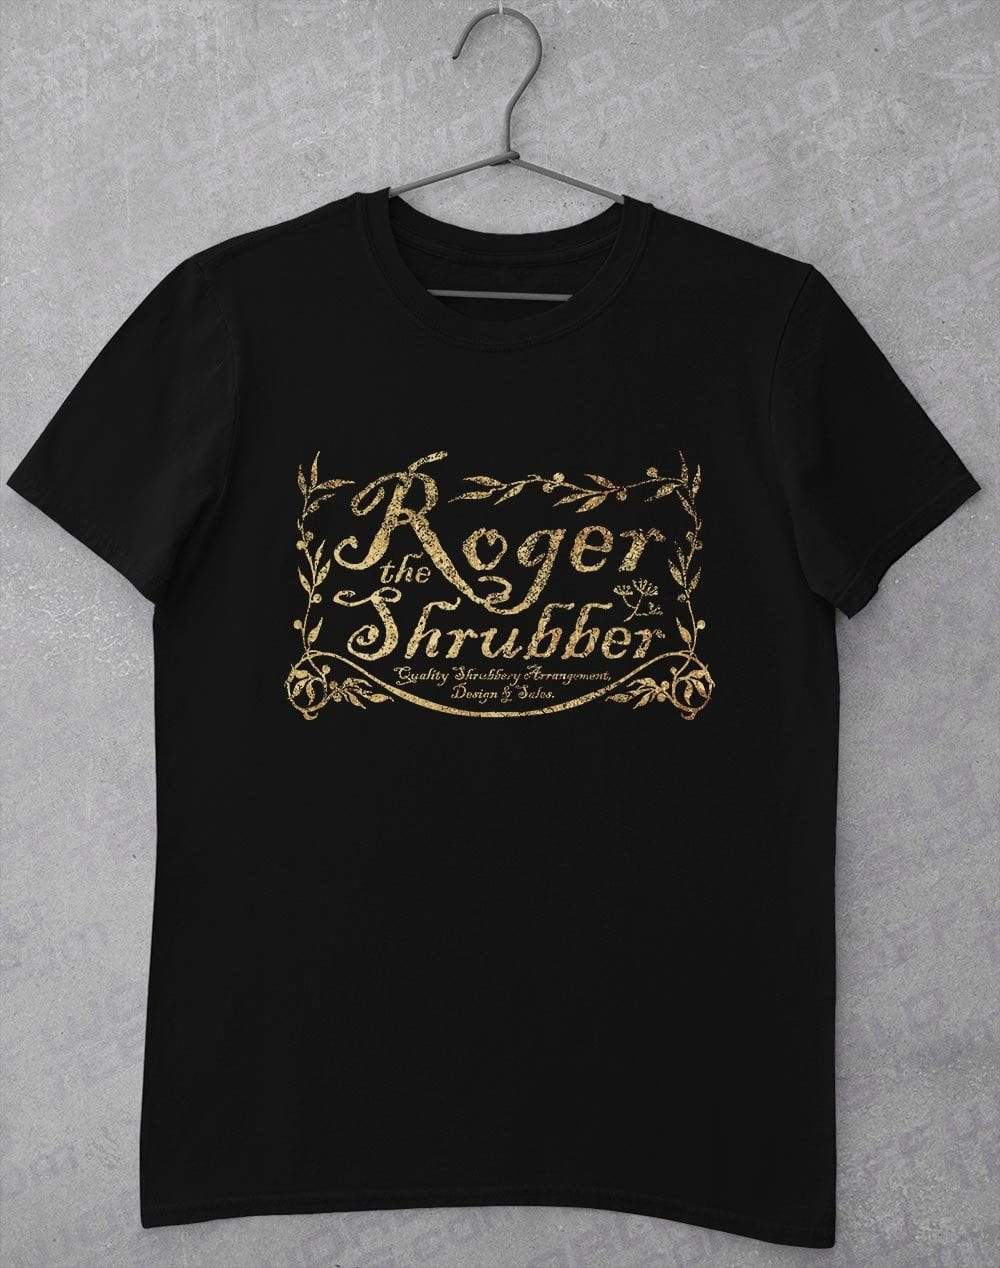 Roger the Shrubber T-Shirt S / Black  - Off World Tees